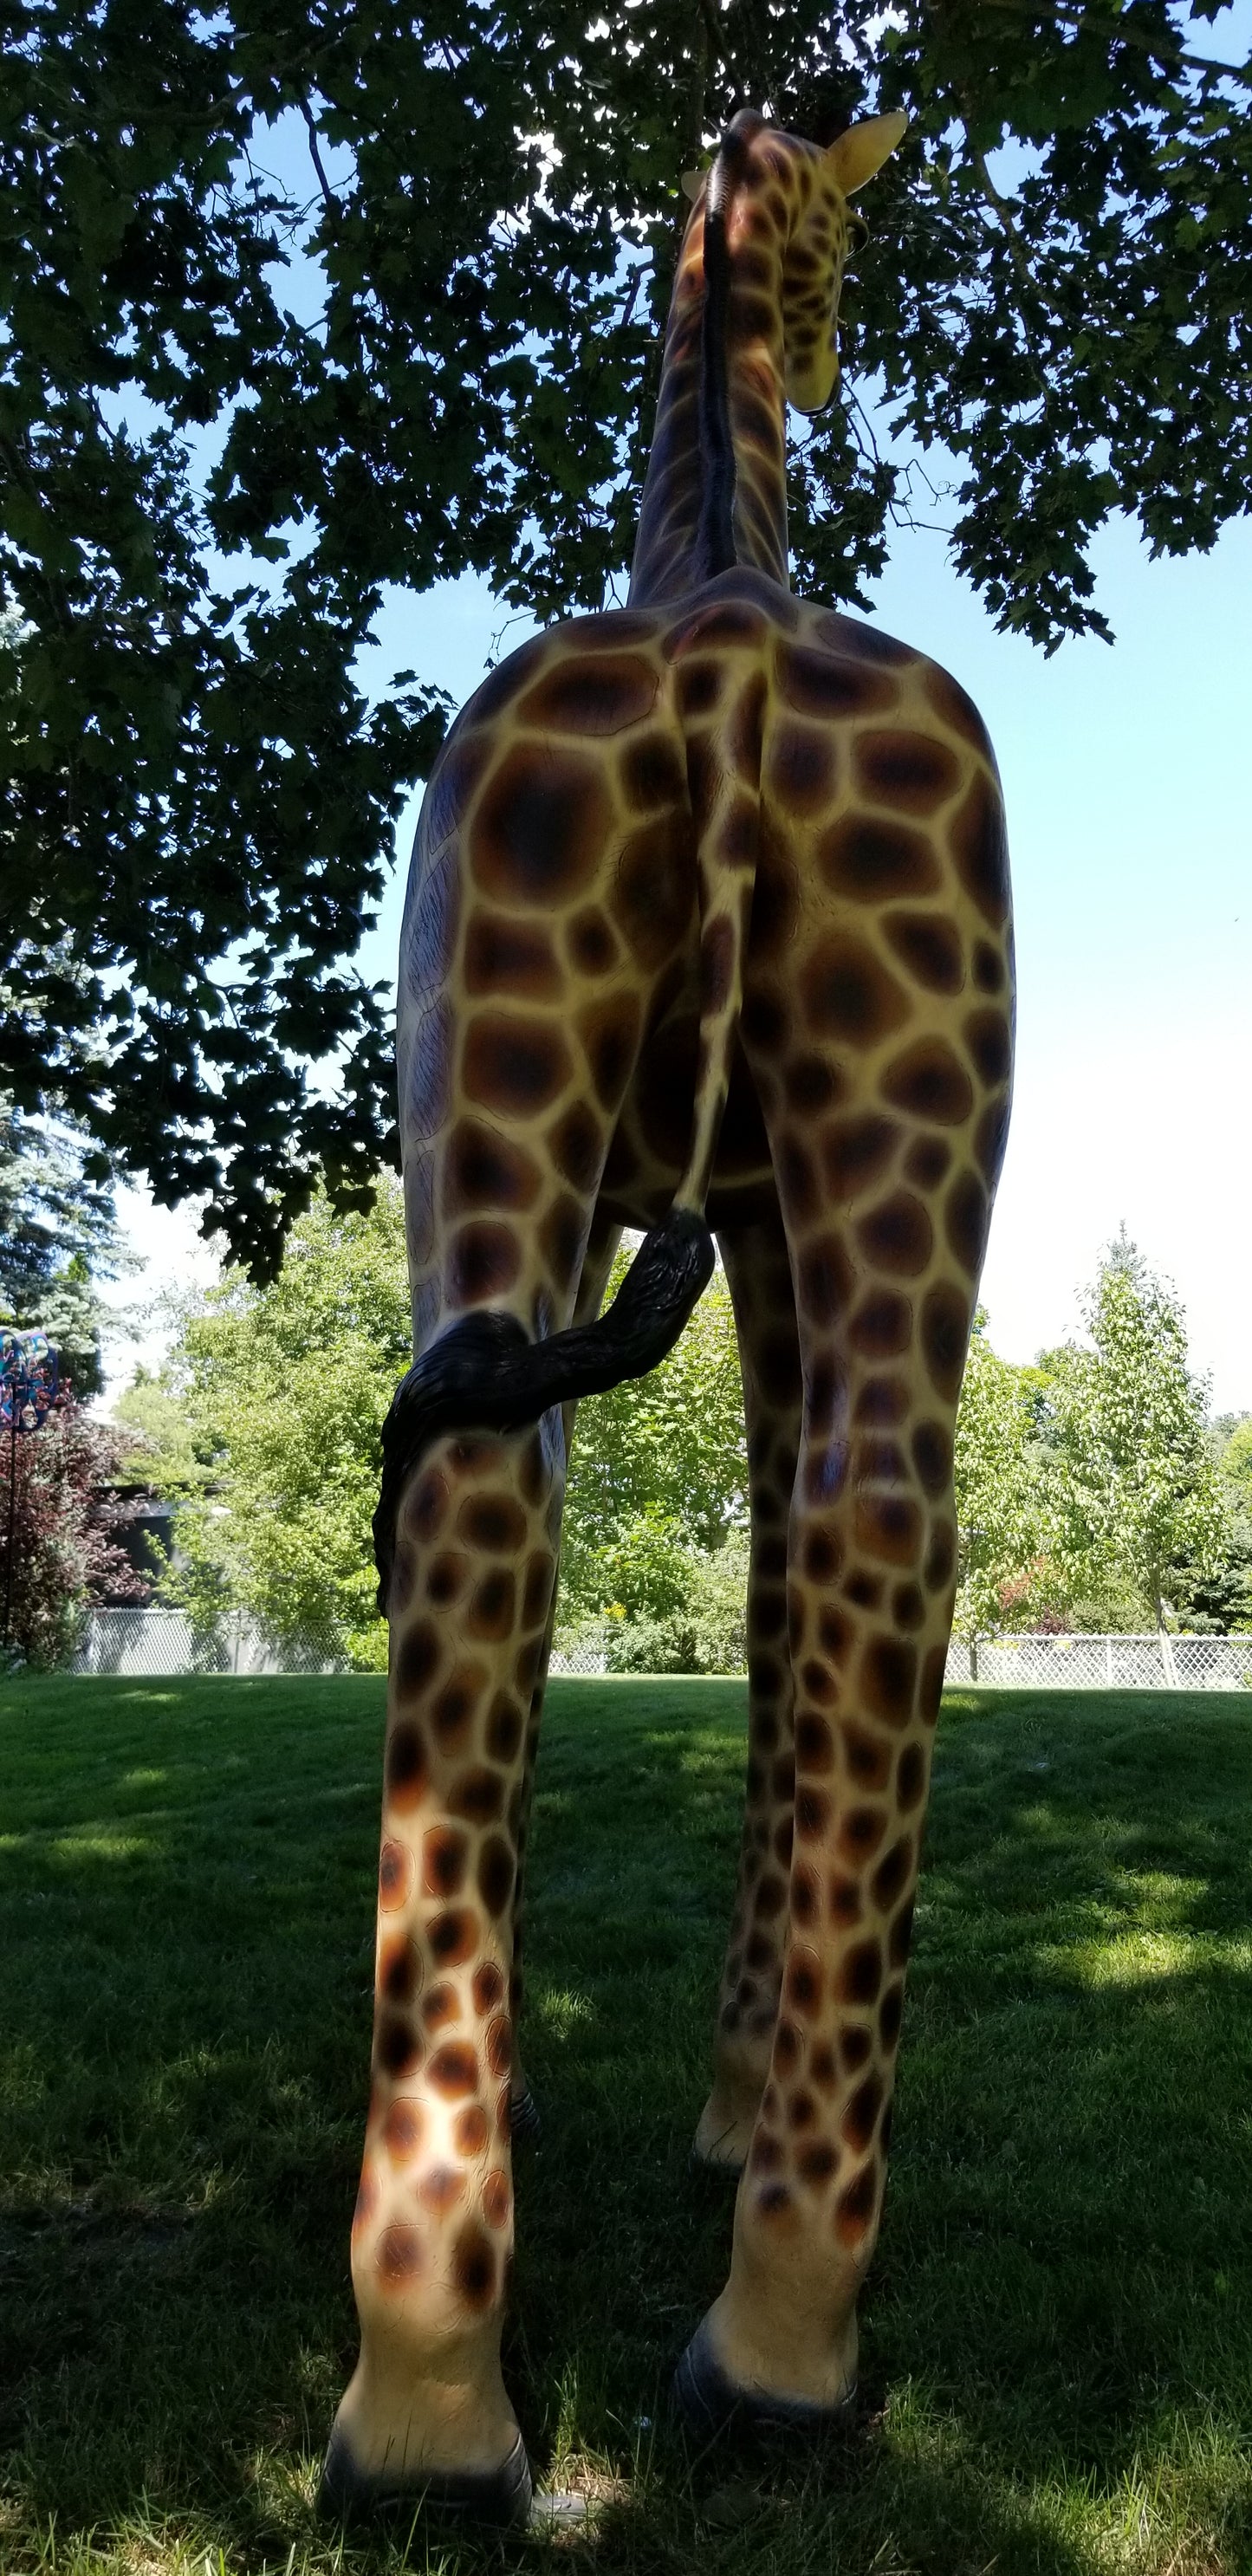 giraffe statue in tail pose